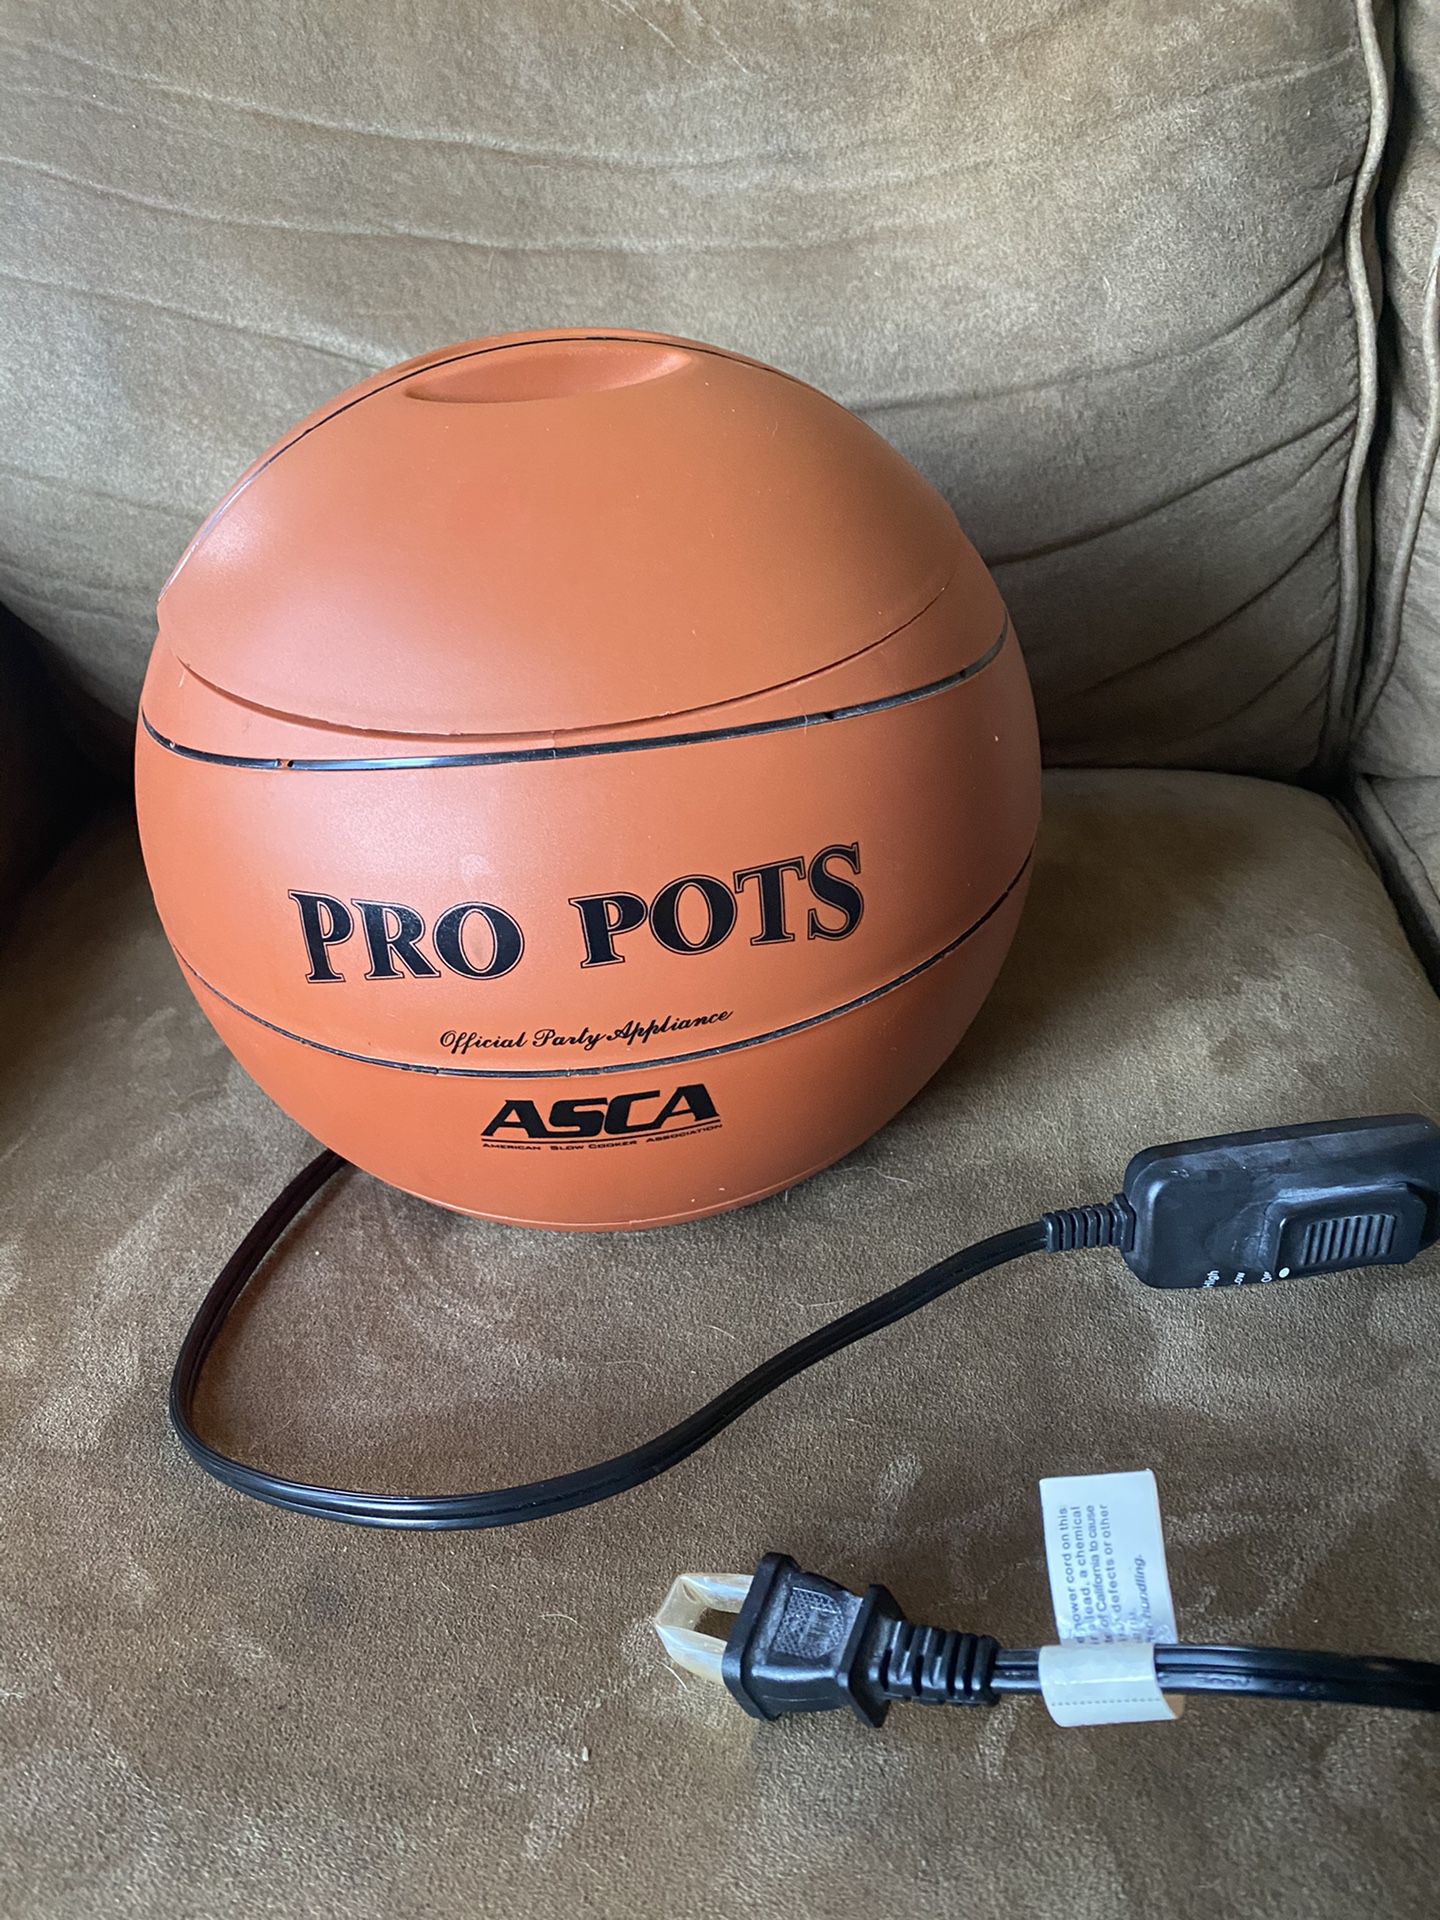 Pro pots basketball slow cooker